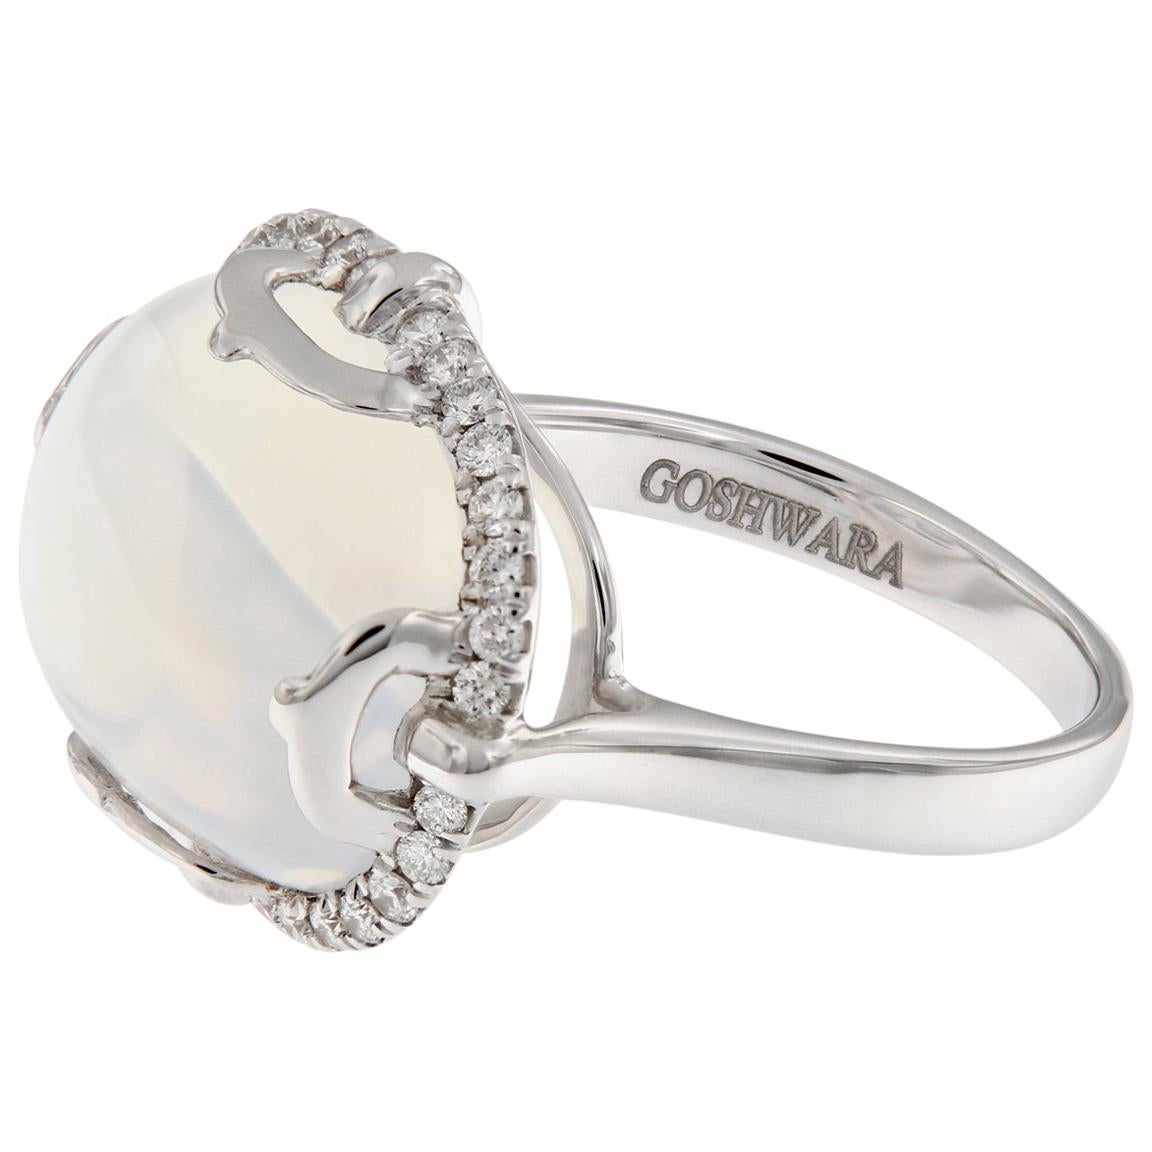 Goshwara “Rock-N-Roll” Cabochon Moon Quartz Diamond 18 Karat White Gold Ring